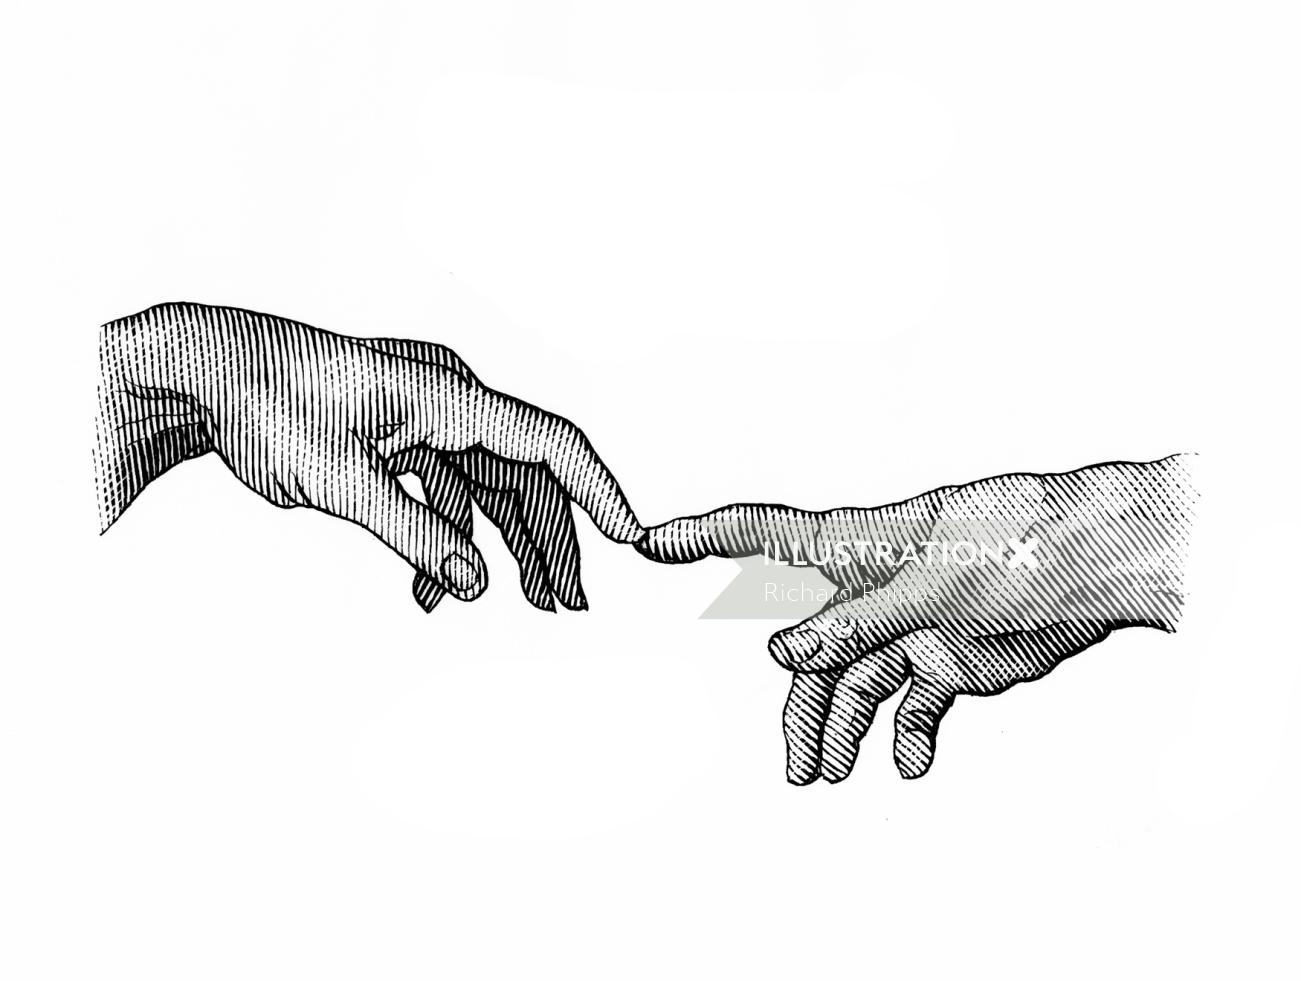 Hands black and white illustration 